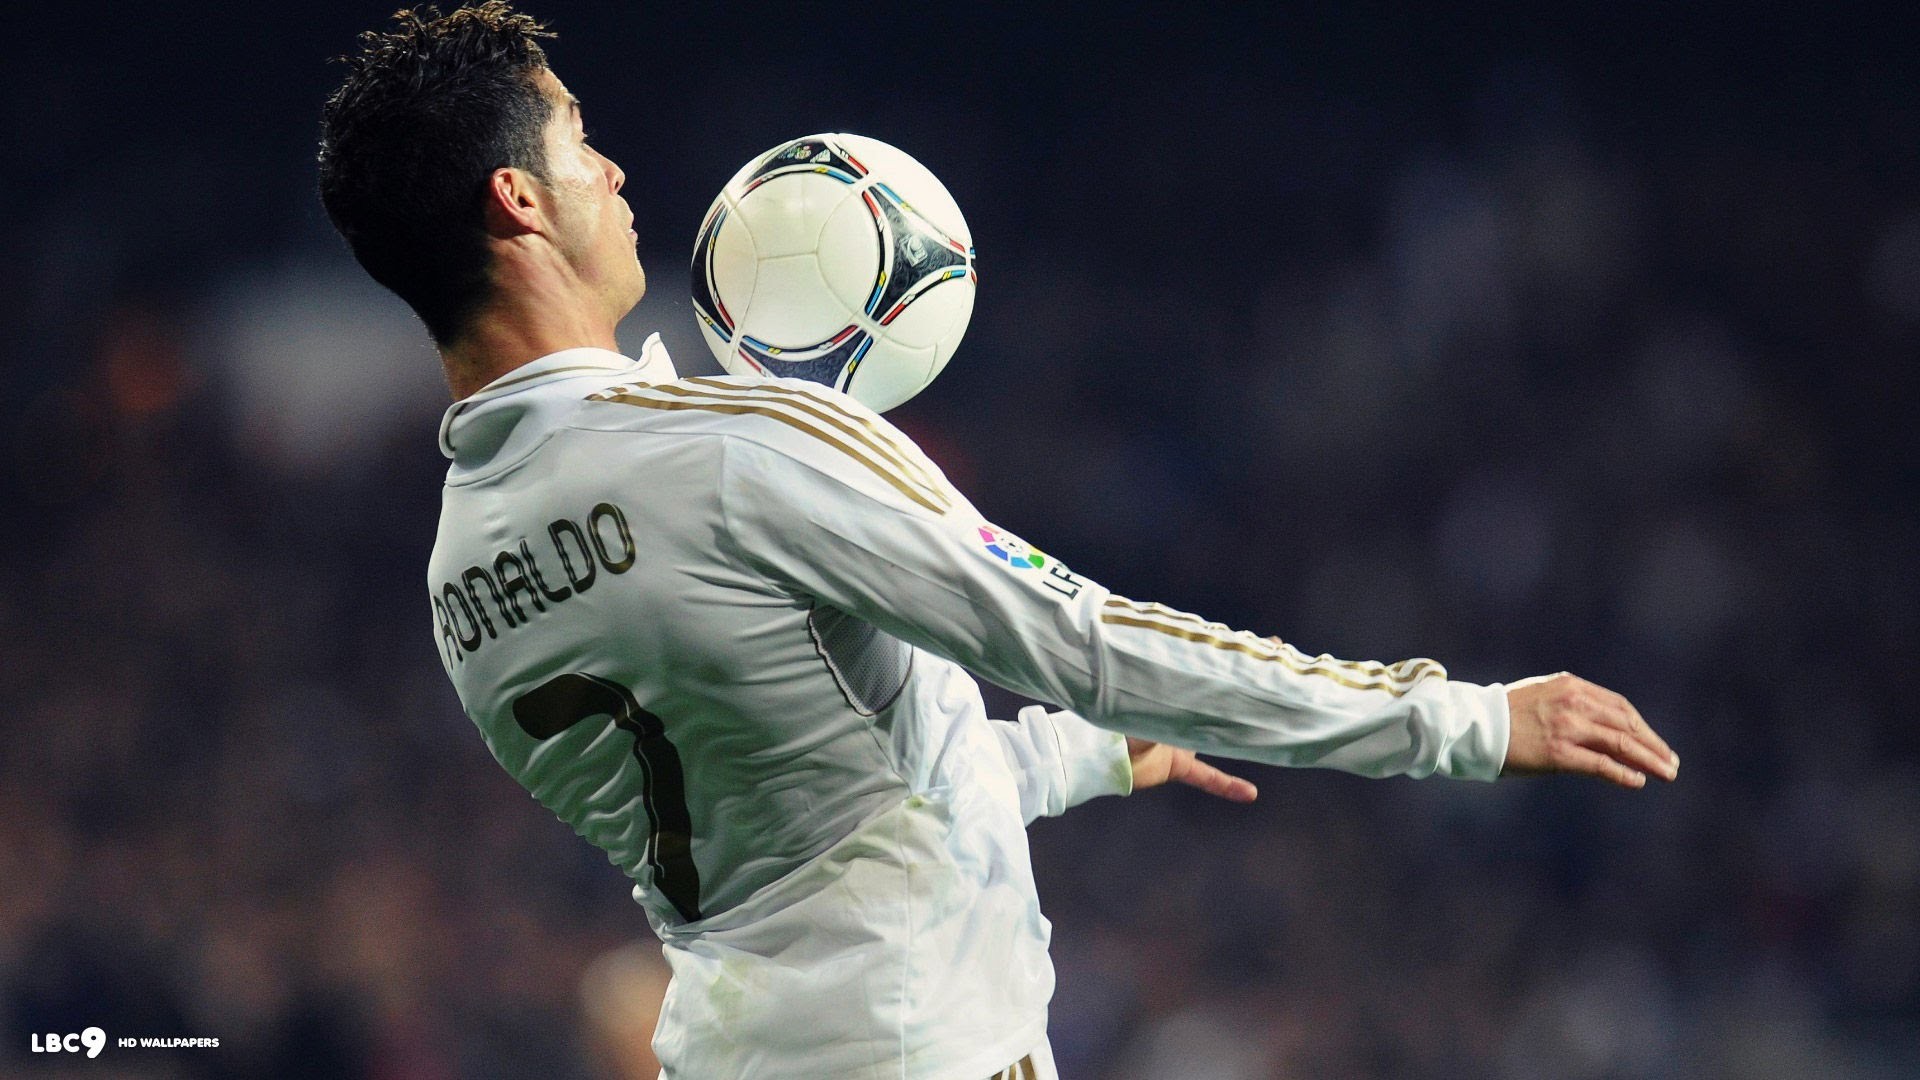 Cristiano Ronaldo Predator Skills Goals Real Madrid 2015 HD 1080p NeoNino Contest